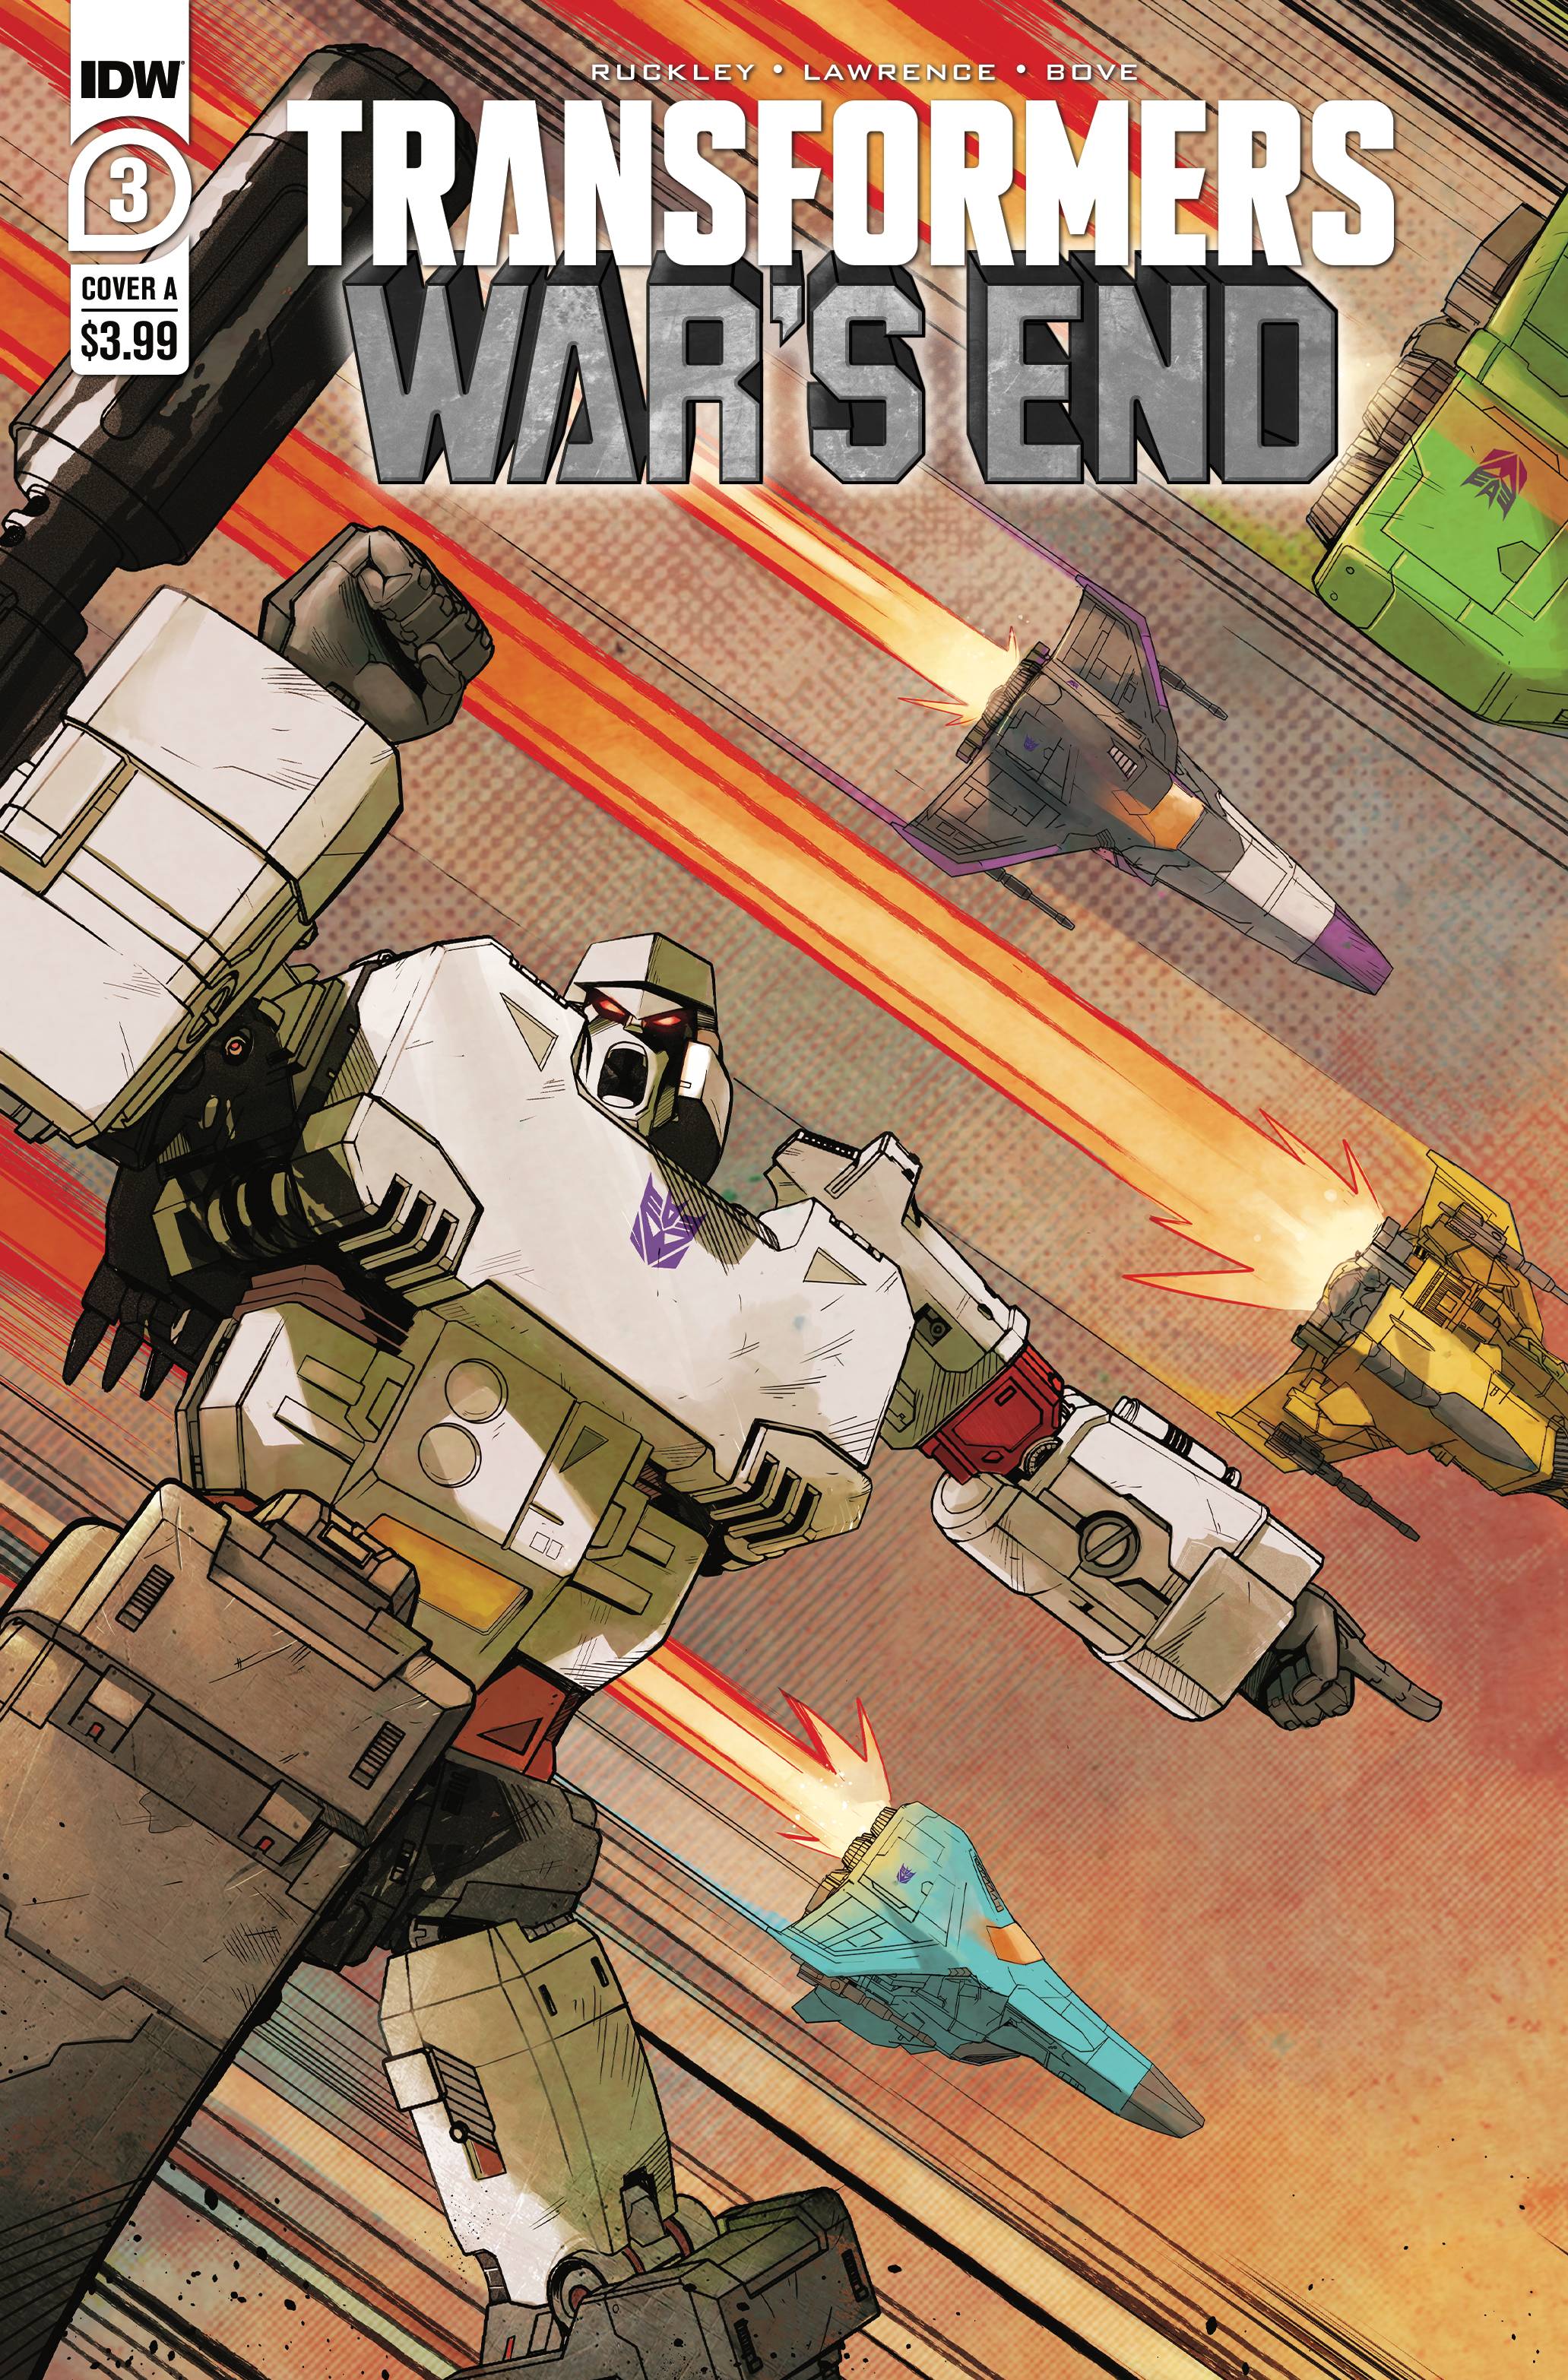 Transformers Wars End #3 Cover A Sebastian Piriz (Of 4)